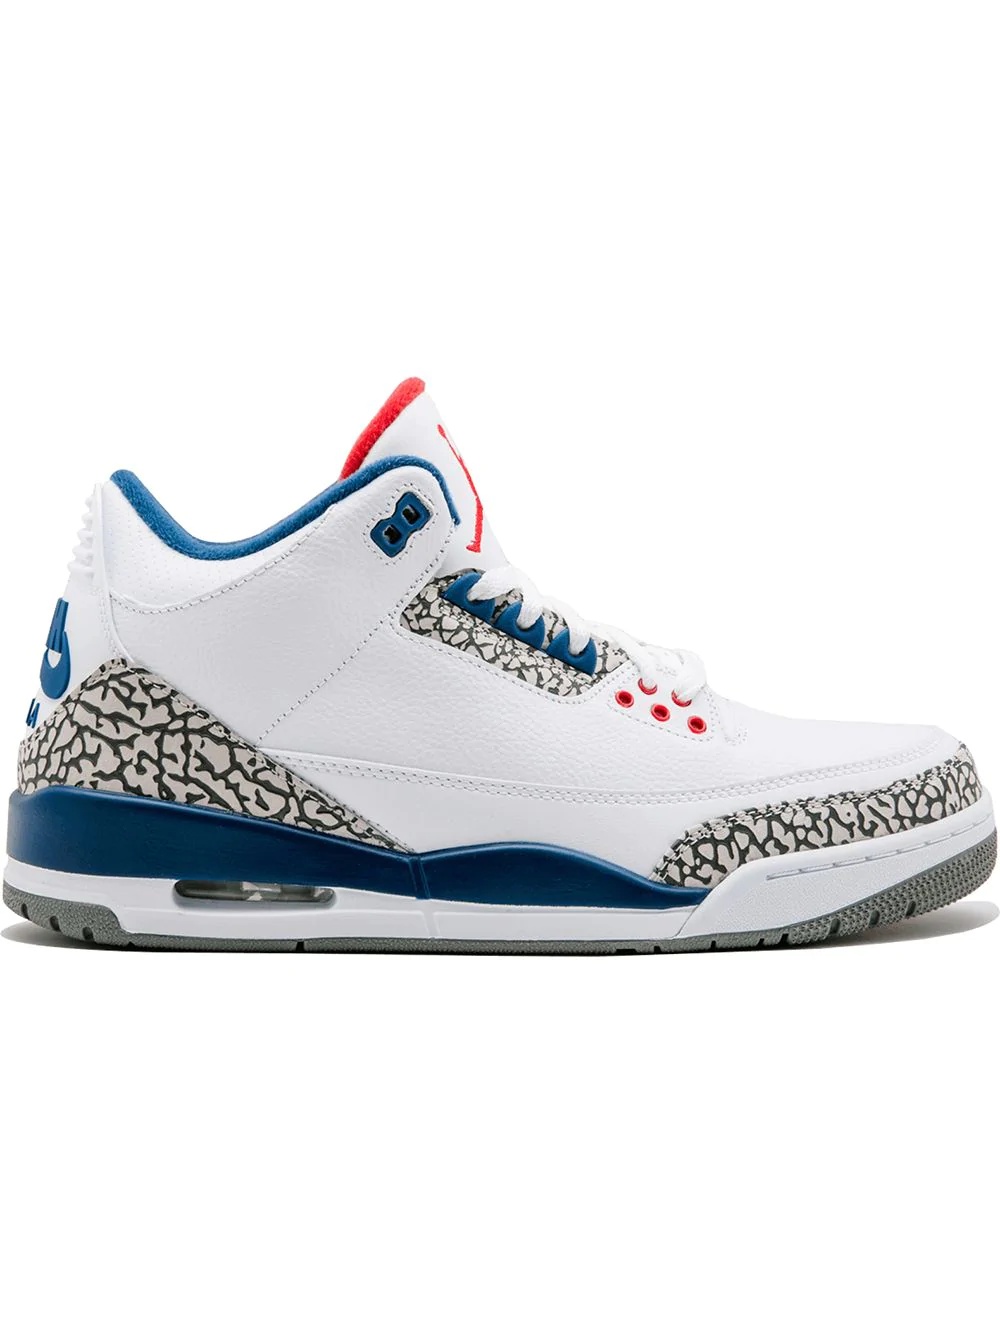 Air Jordan 3 Retro OG "True Blue" sneakers - 1